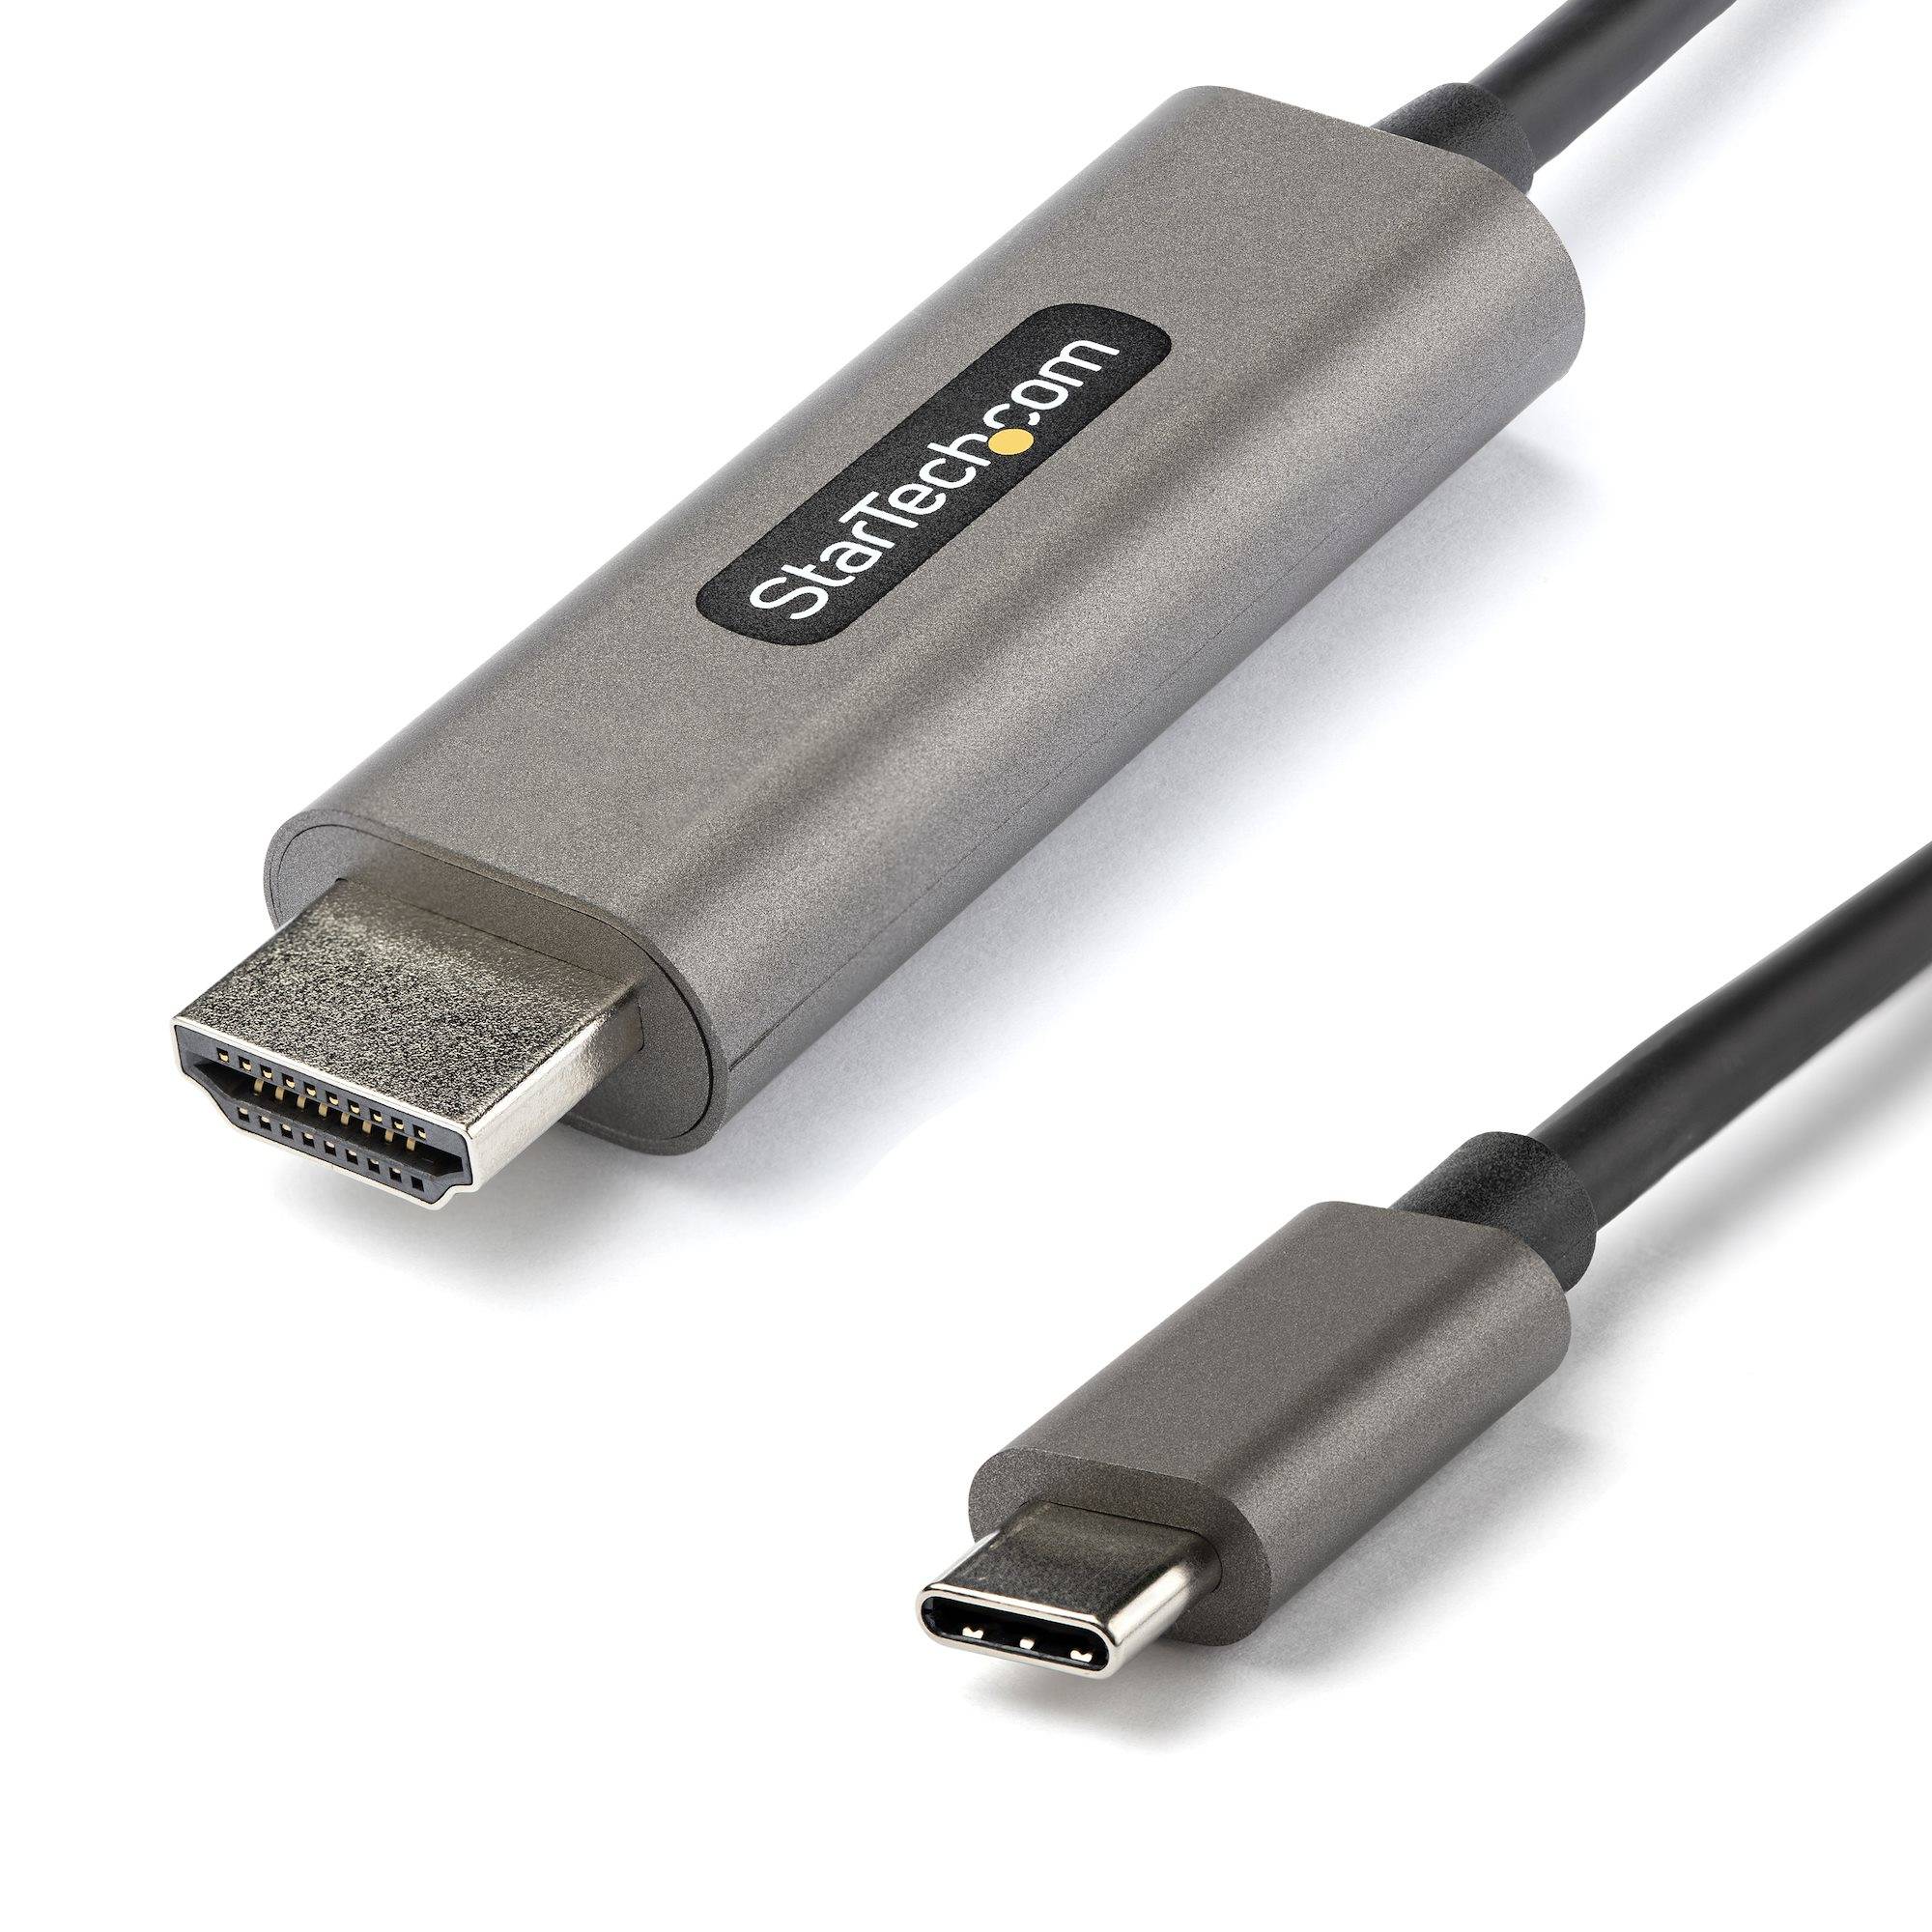 Rca Informatique - Image du produit : 13FT USB C TO HDMI CABLE 4K 60 WITH HDR10 - USB-C TO HDMI MONIT